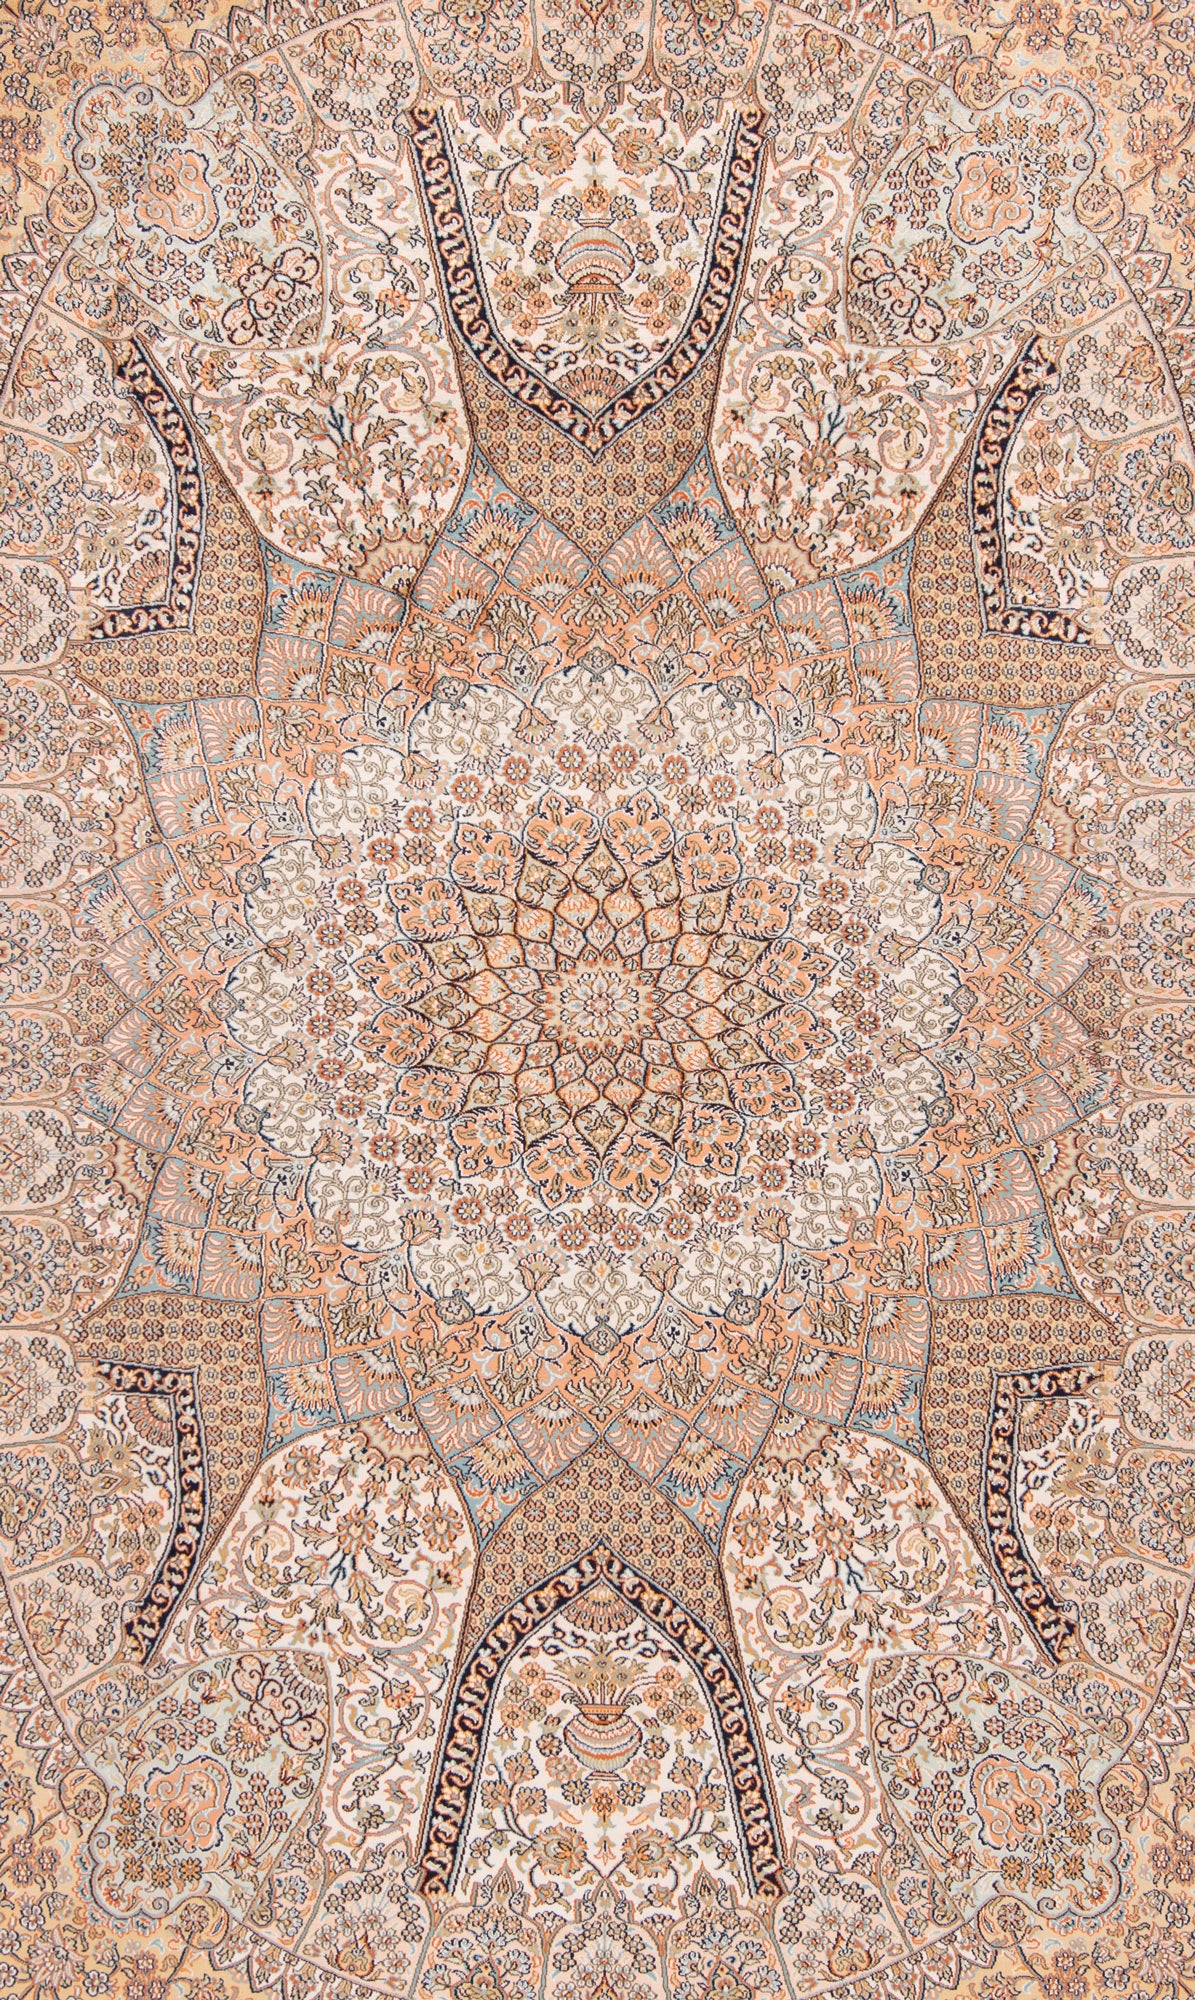 Seda pura de Cachemira | 308 x 215 cm